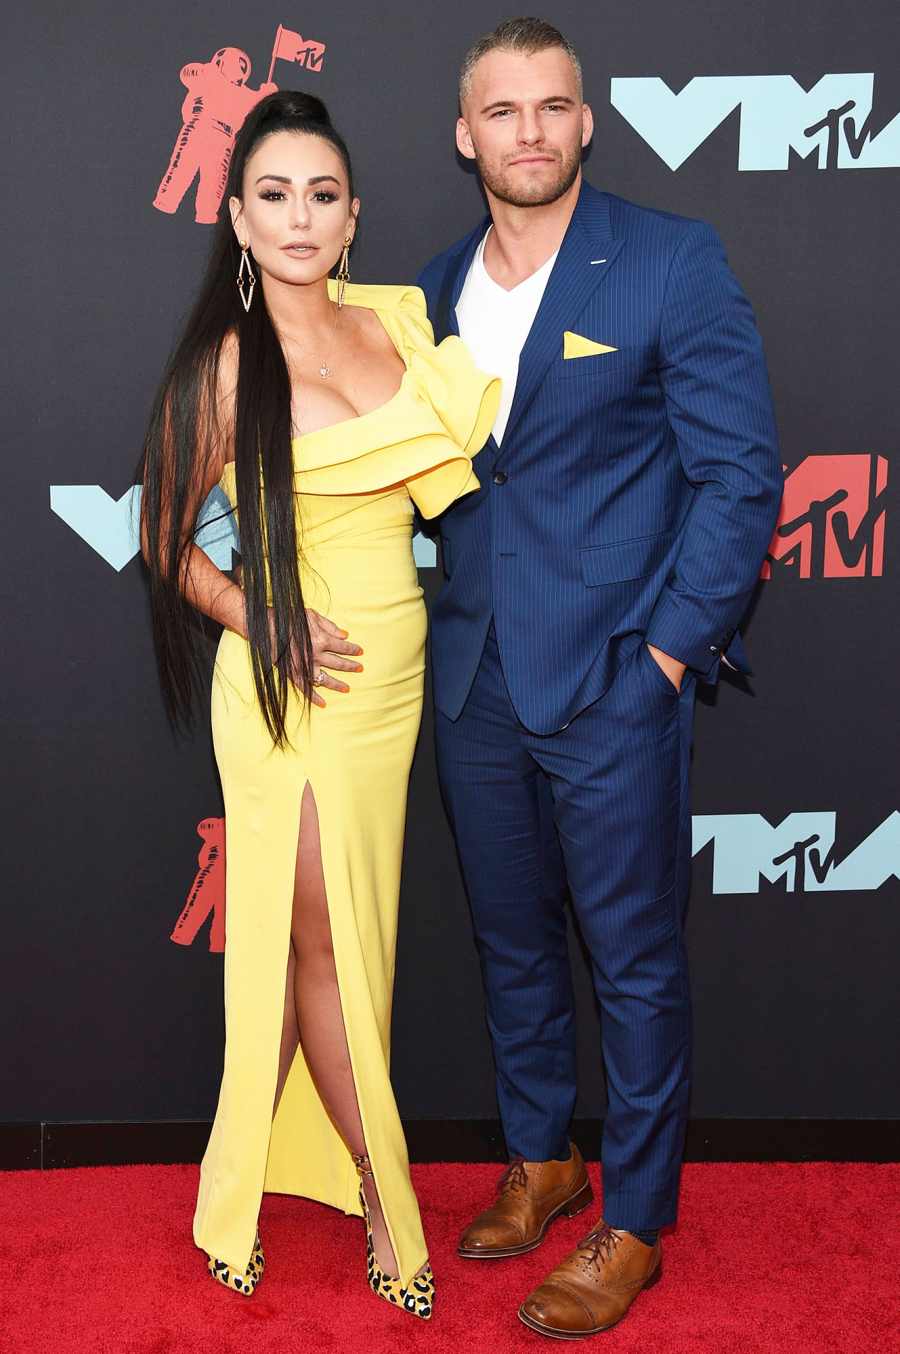 Jenni J-Woww Farley and Zack Clayton Carpinello Hottest Couples at the VMAs 2019